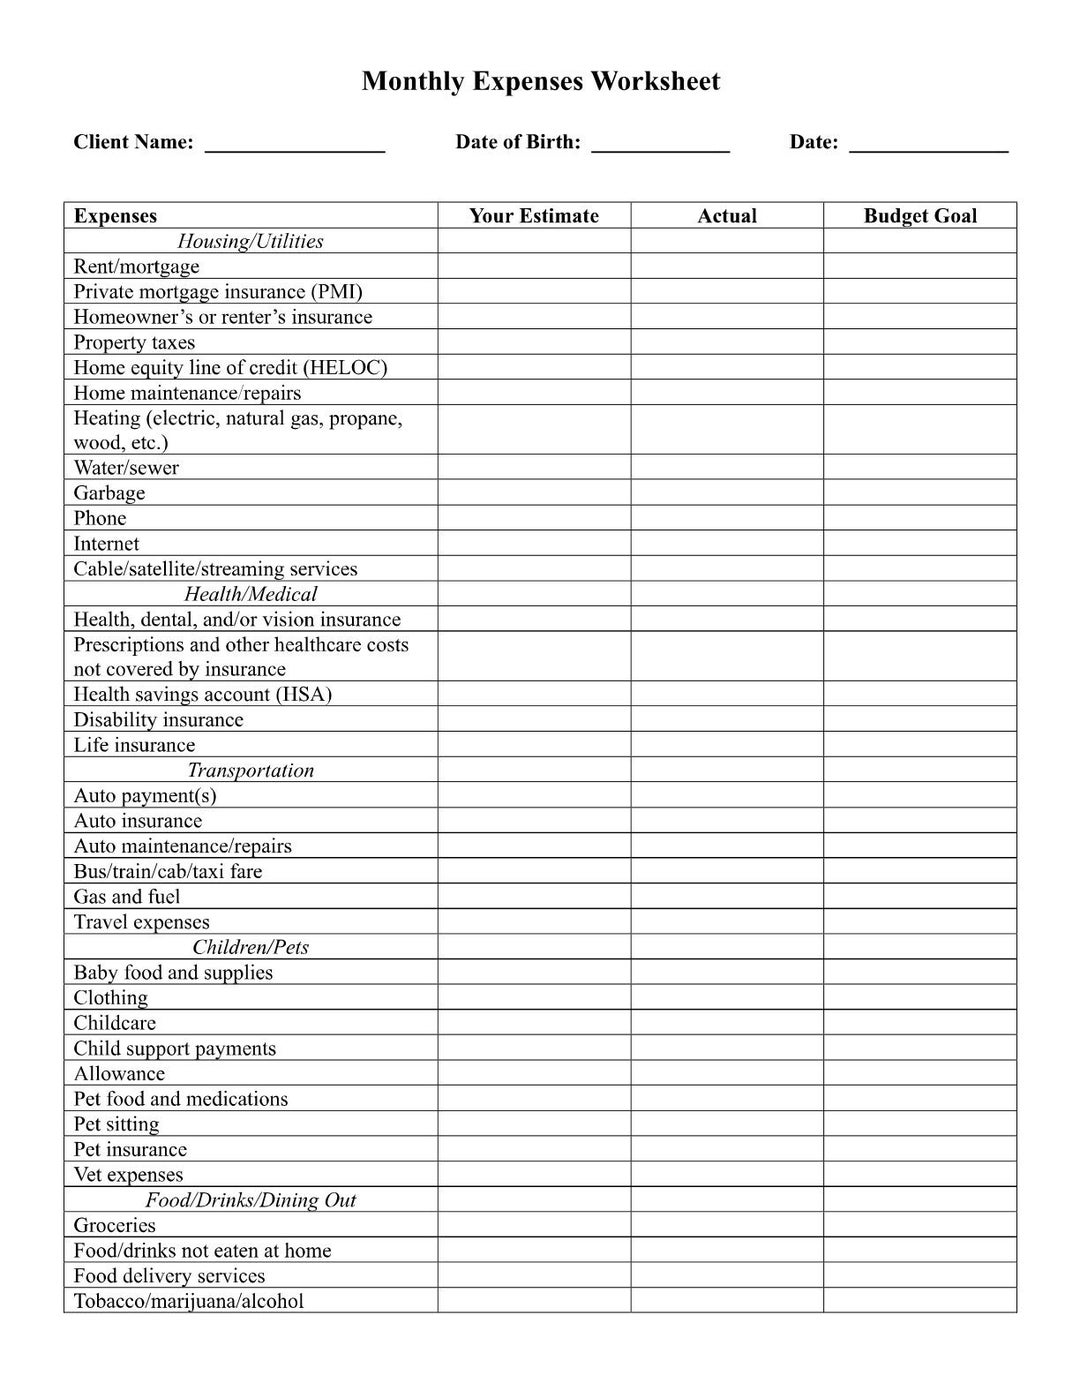 Monthly Expenses Worksheet Budget Blank Digital Printable Template PDF ...